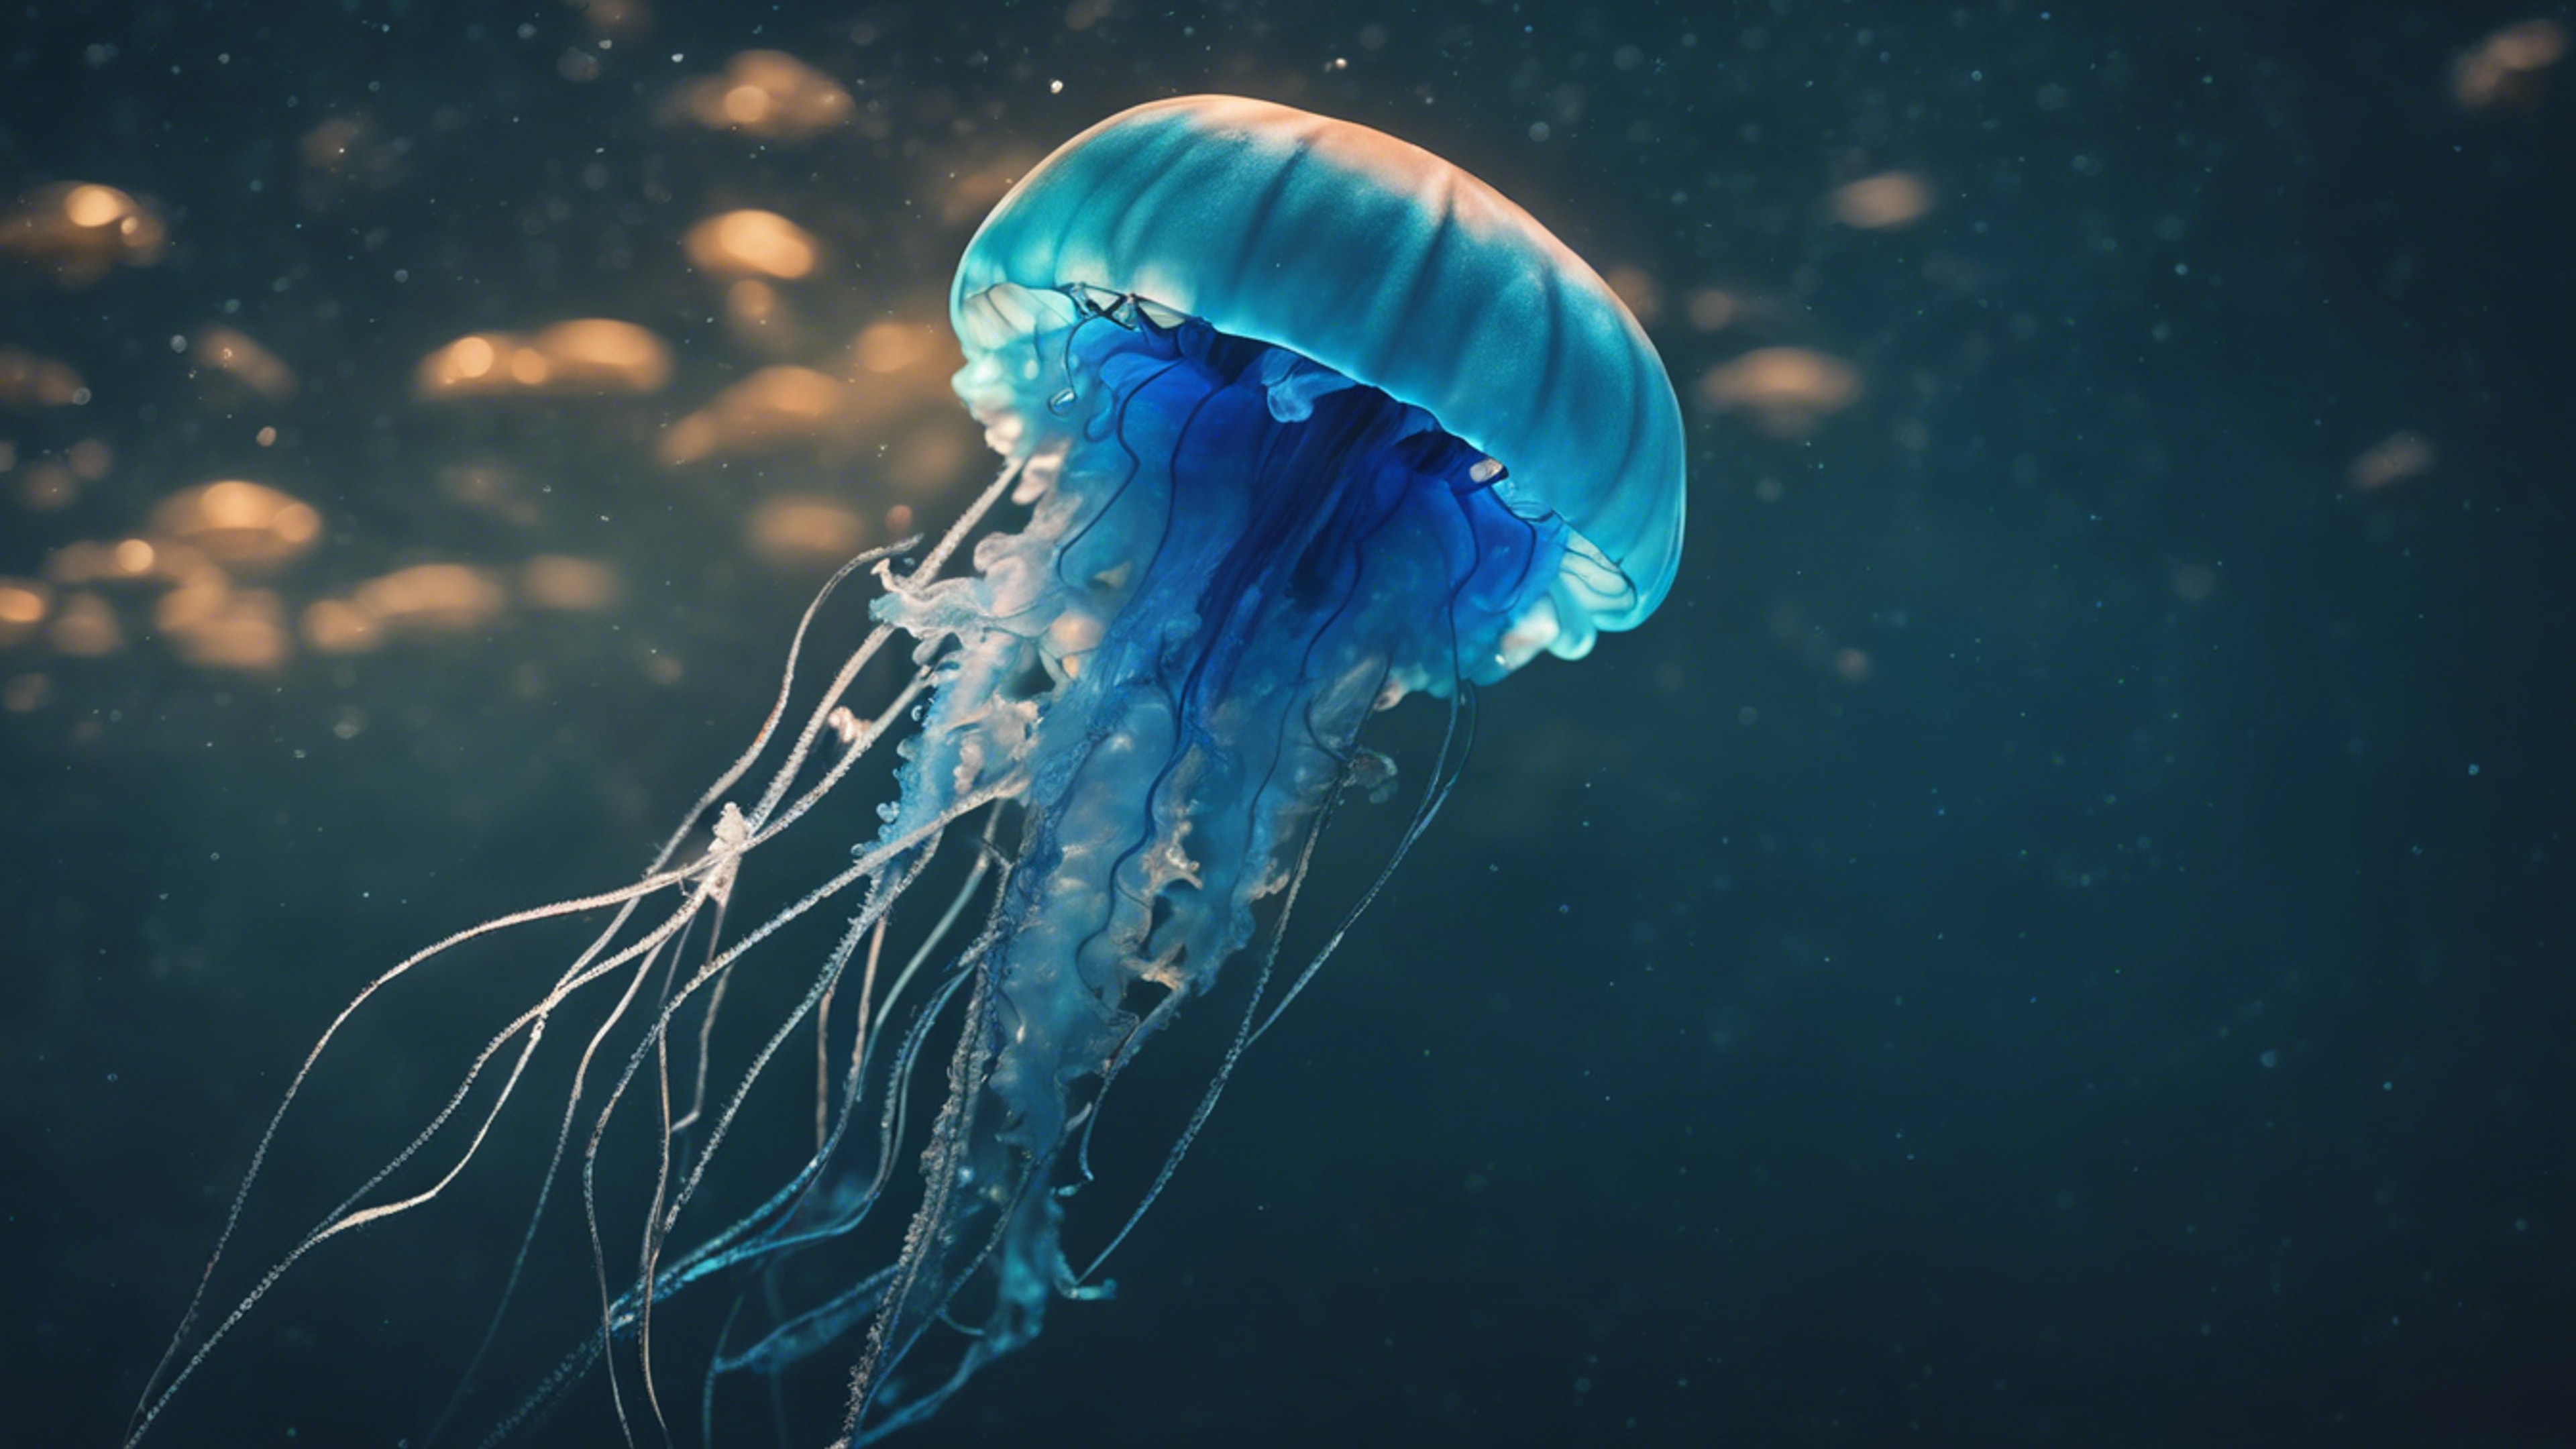 A neon blue jellyfish gracefully floating in the dark ocean depths. 벽지[de52a1967abe4ca3a1c8]